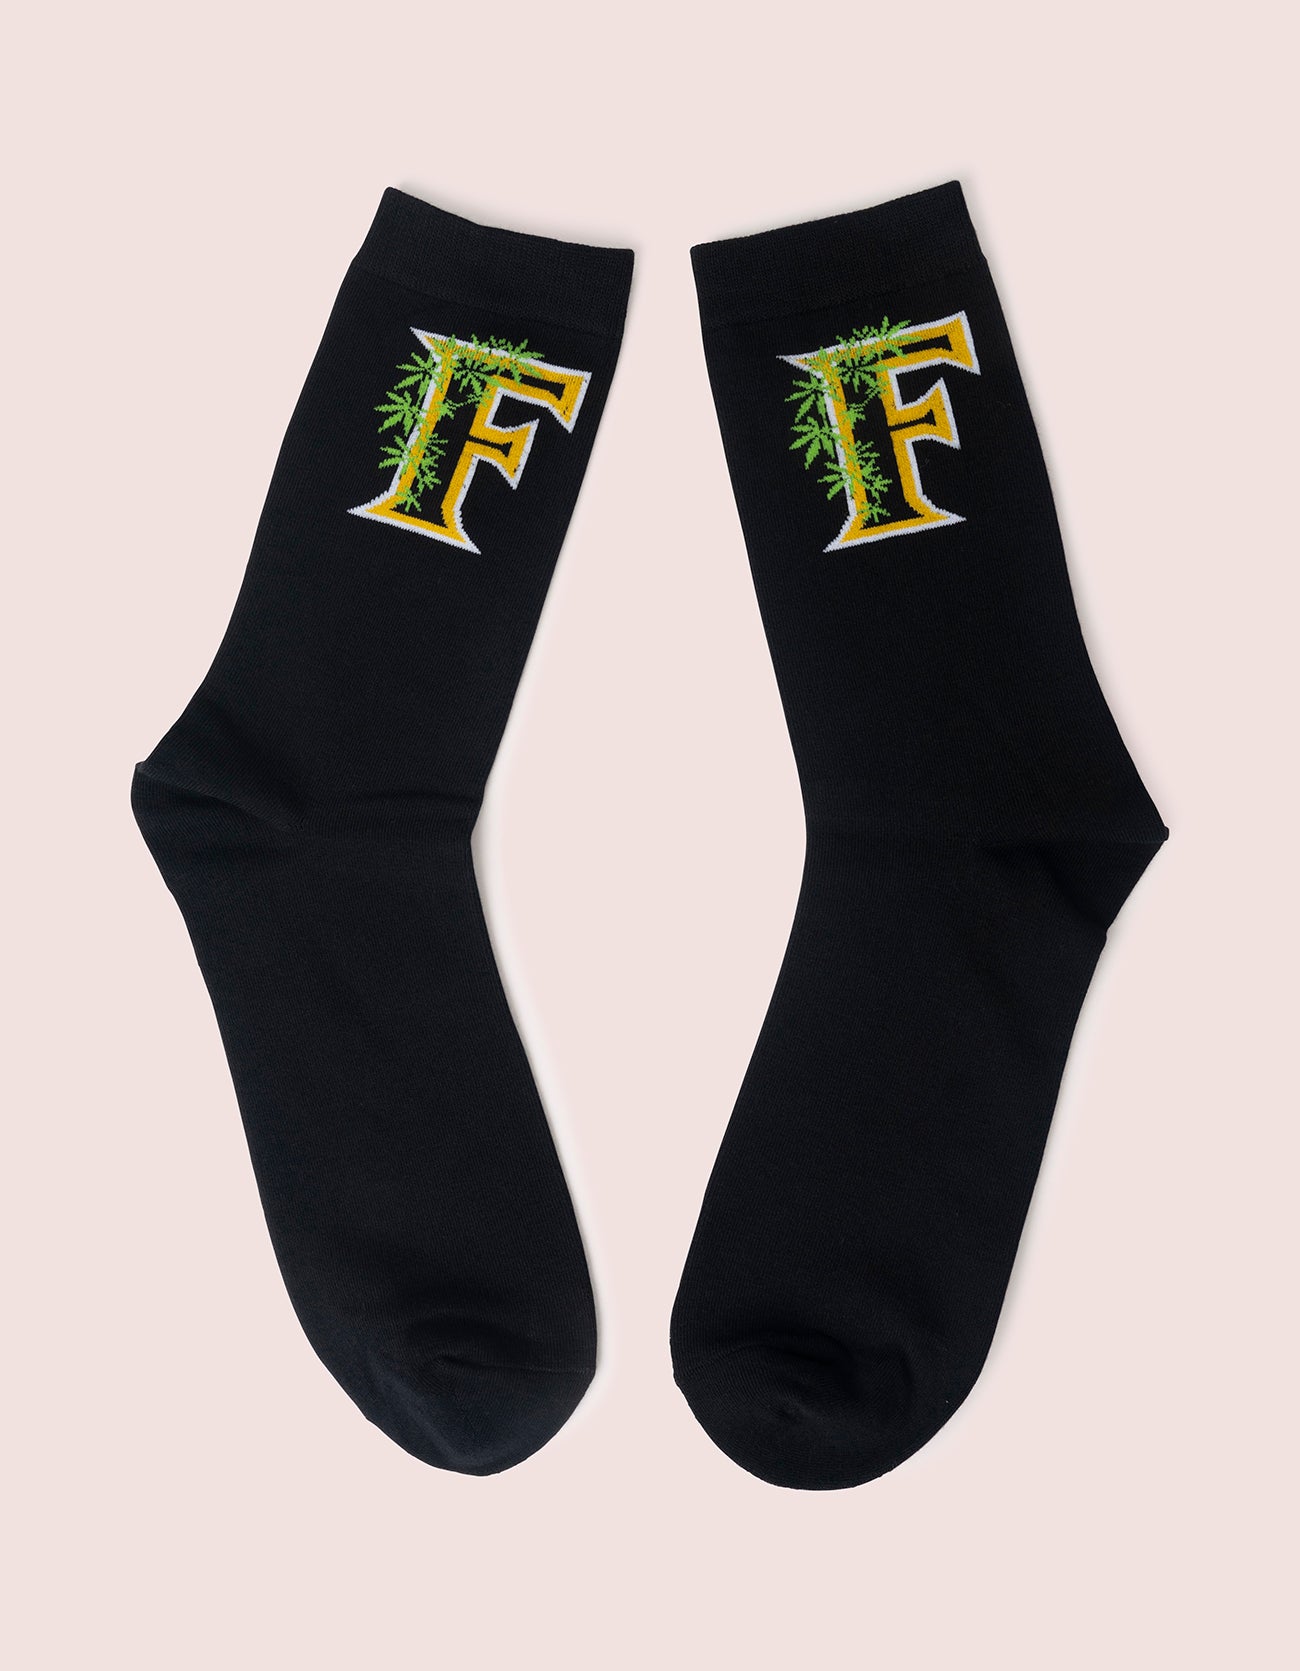 Flee Farms Black Socks